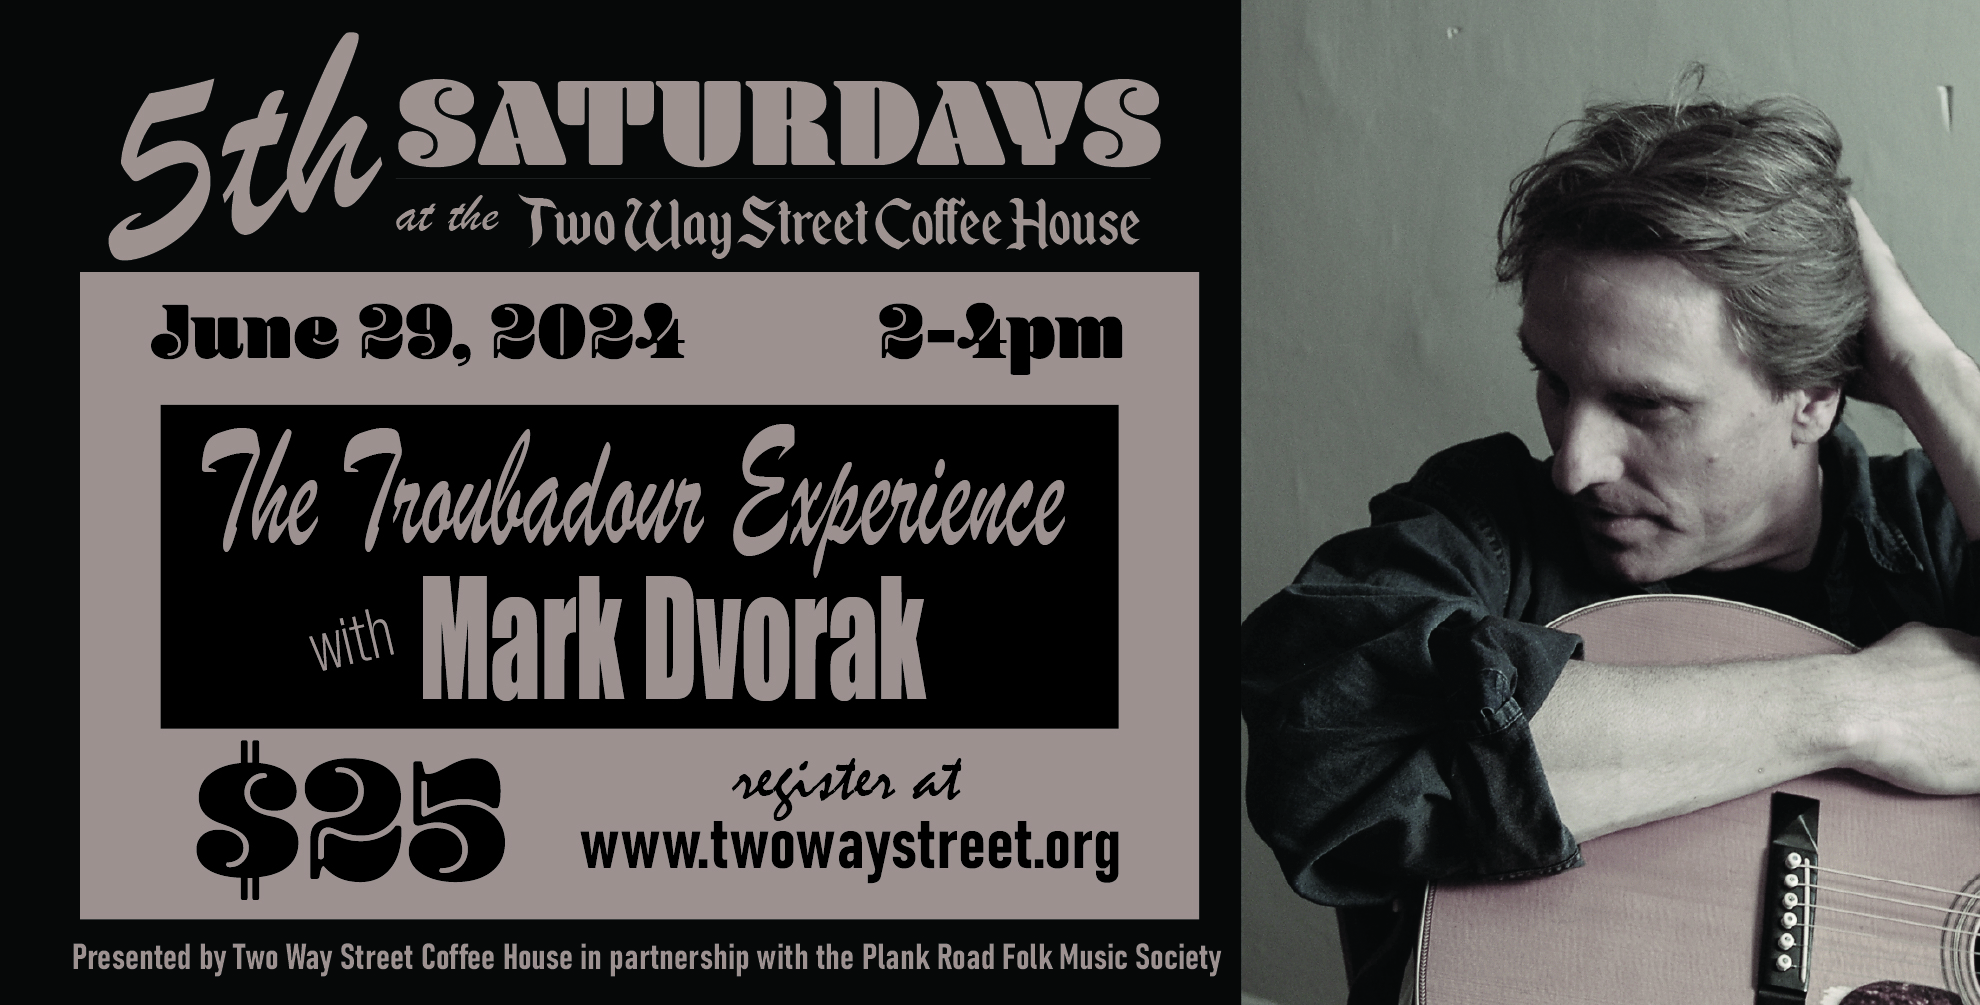 Mark Dvorak 5th Saturday Registration